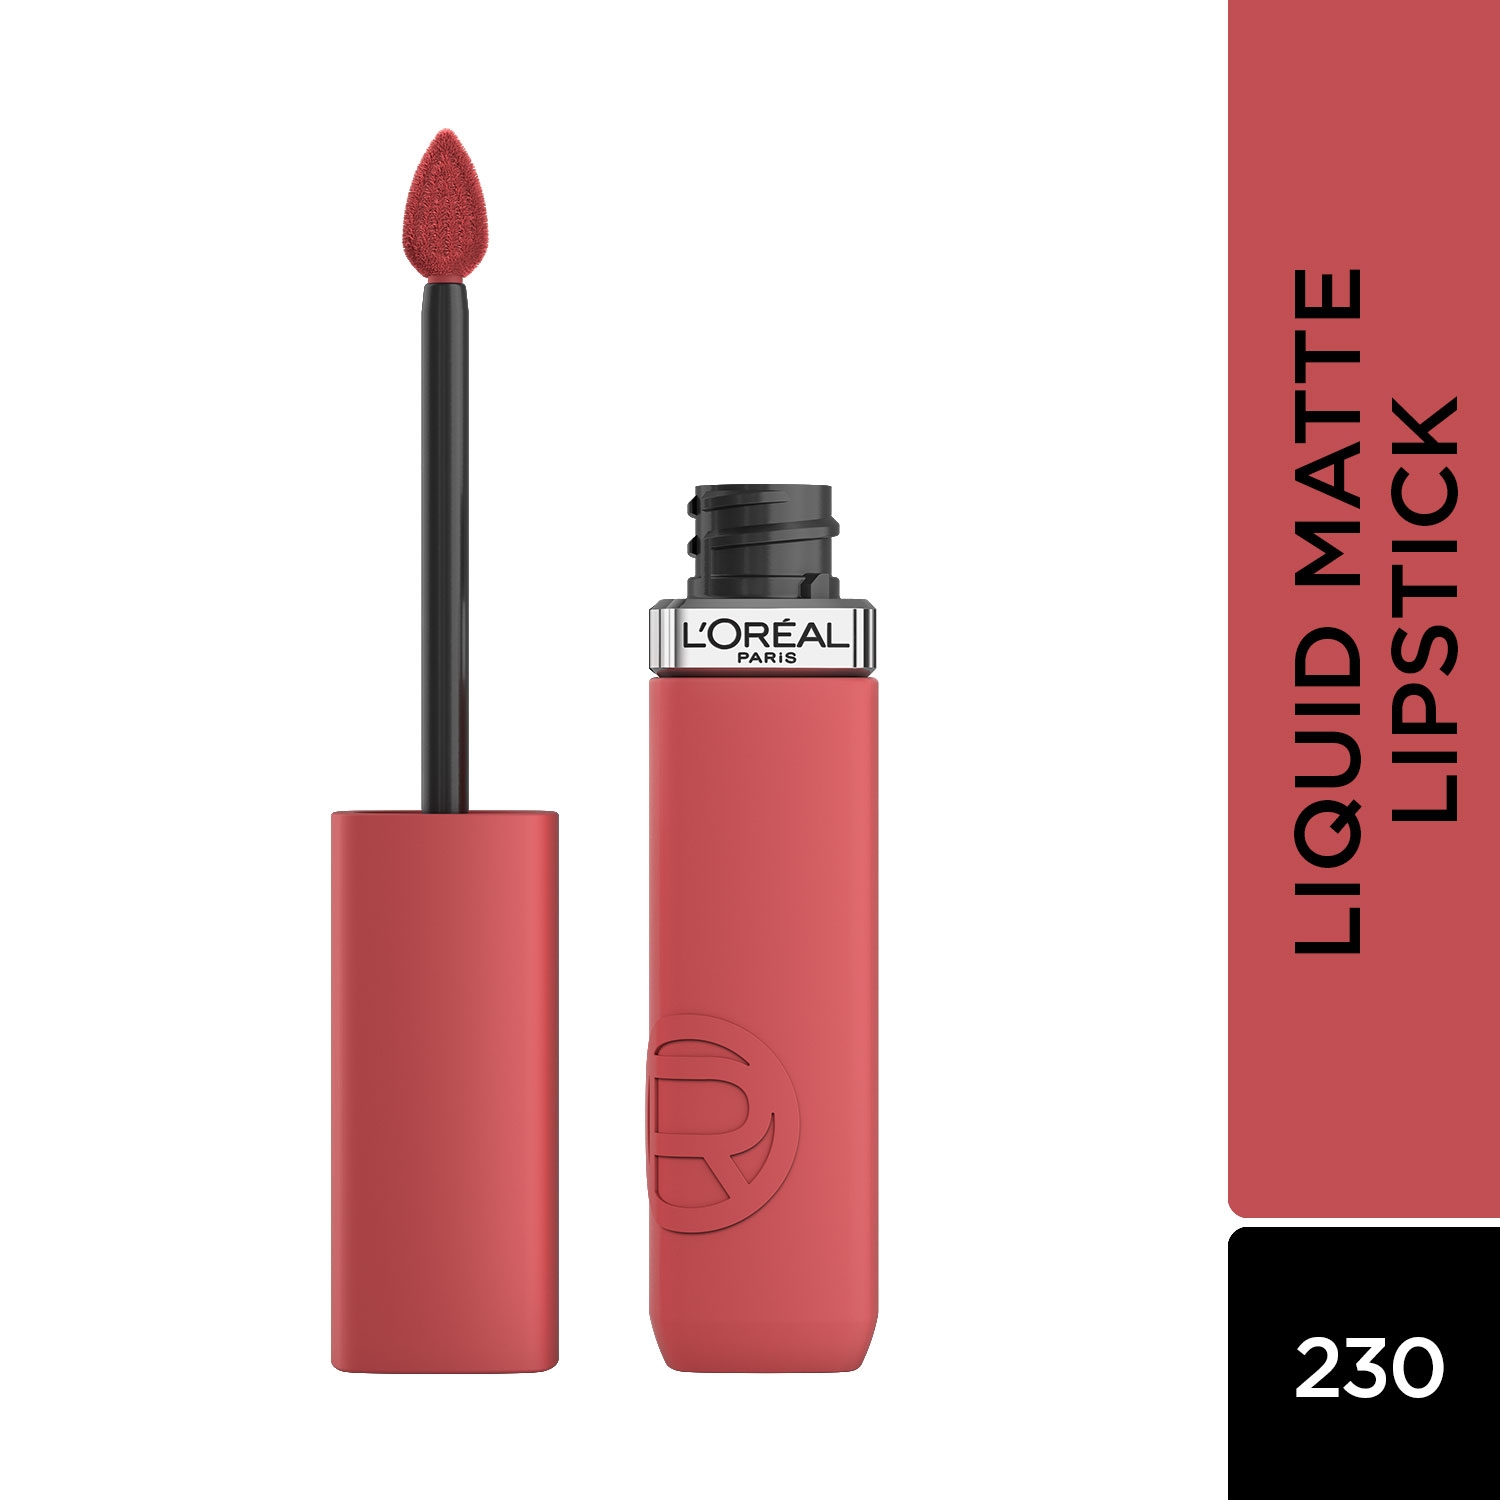 L'Oreal Paris Infallible Matte Resistance Liquid Lipstick - 230 Shopping Spree (5ml)